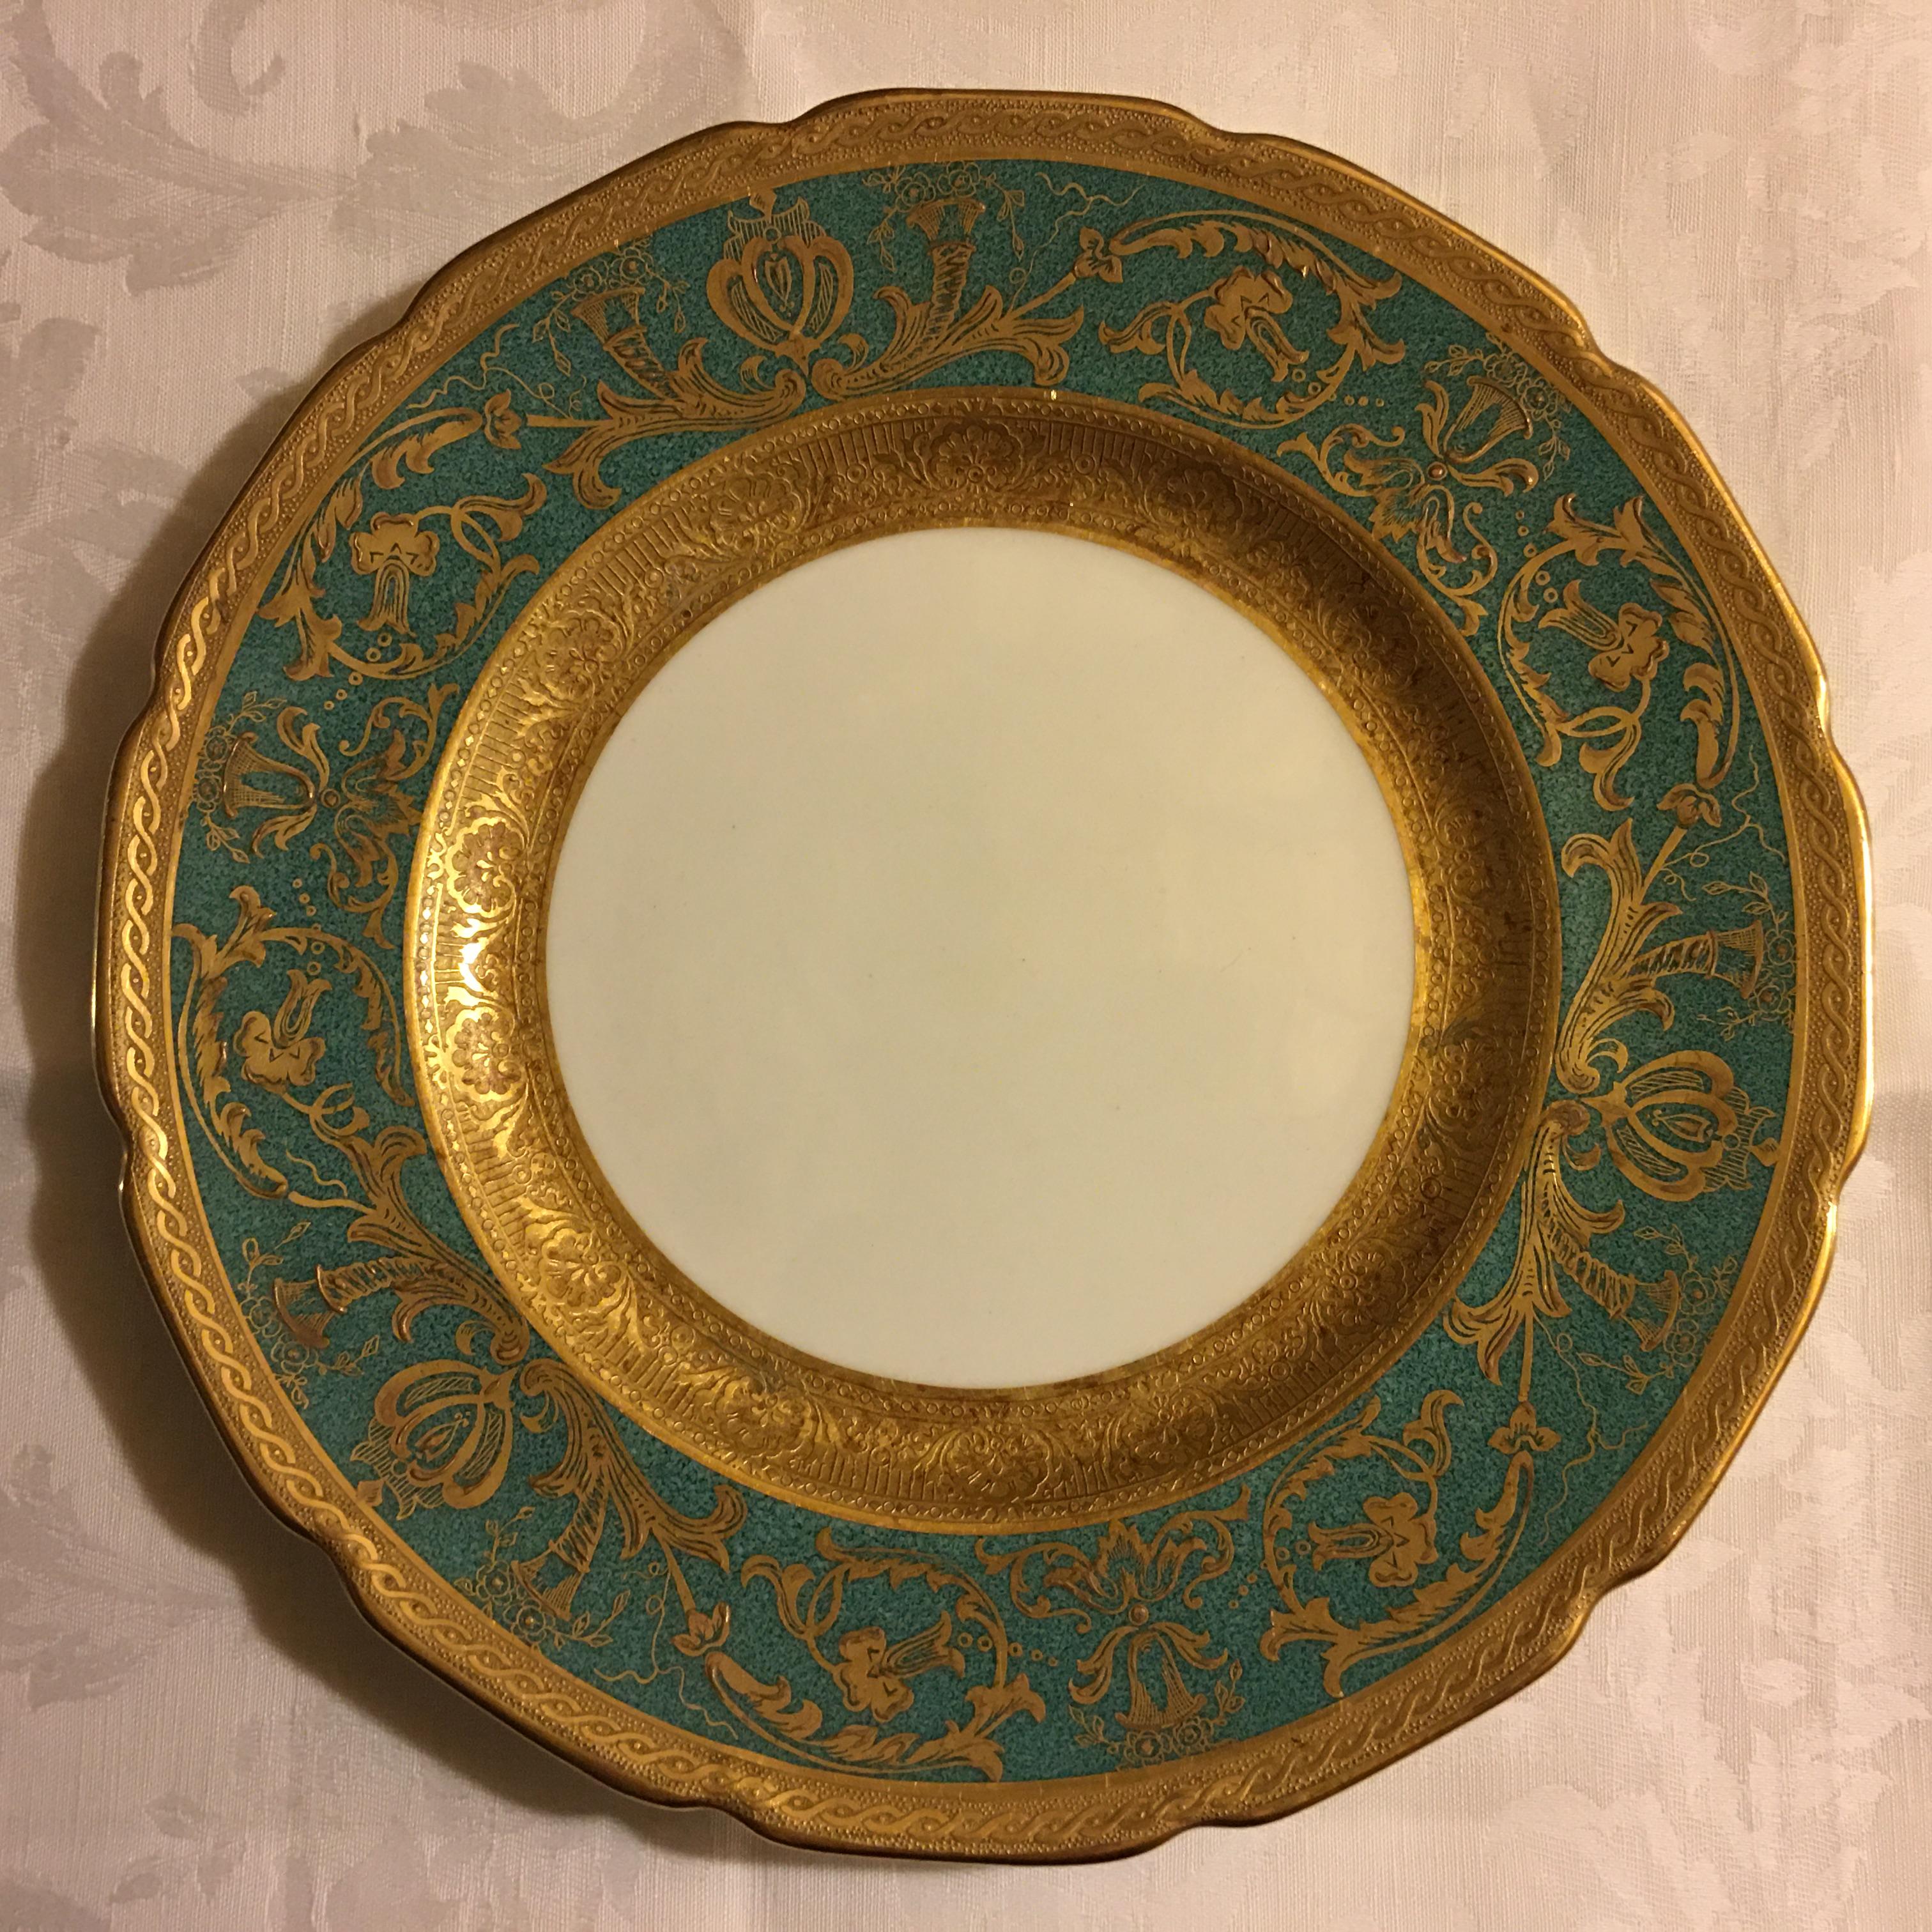 Belle Époque Ovington’s New York Gold Encrusted Royal Doulton Teal on White Dessert Plates For Sale